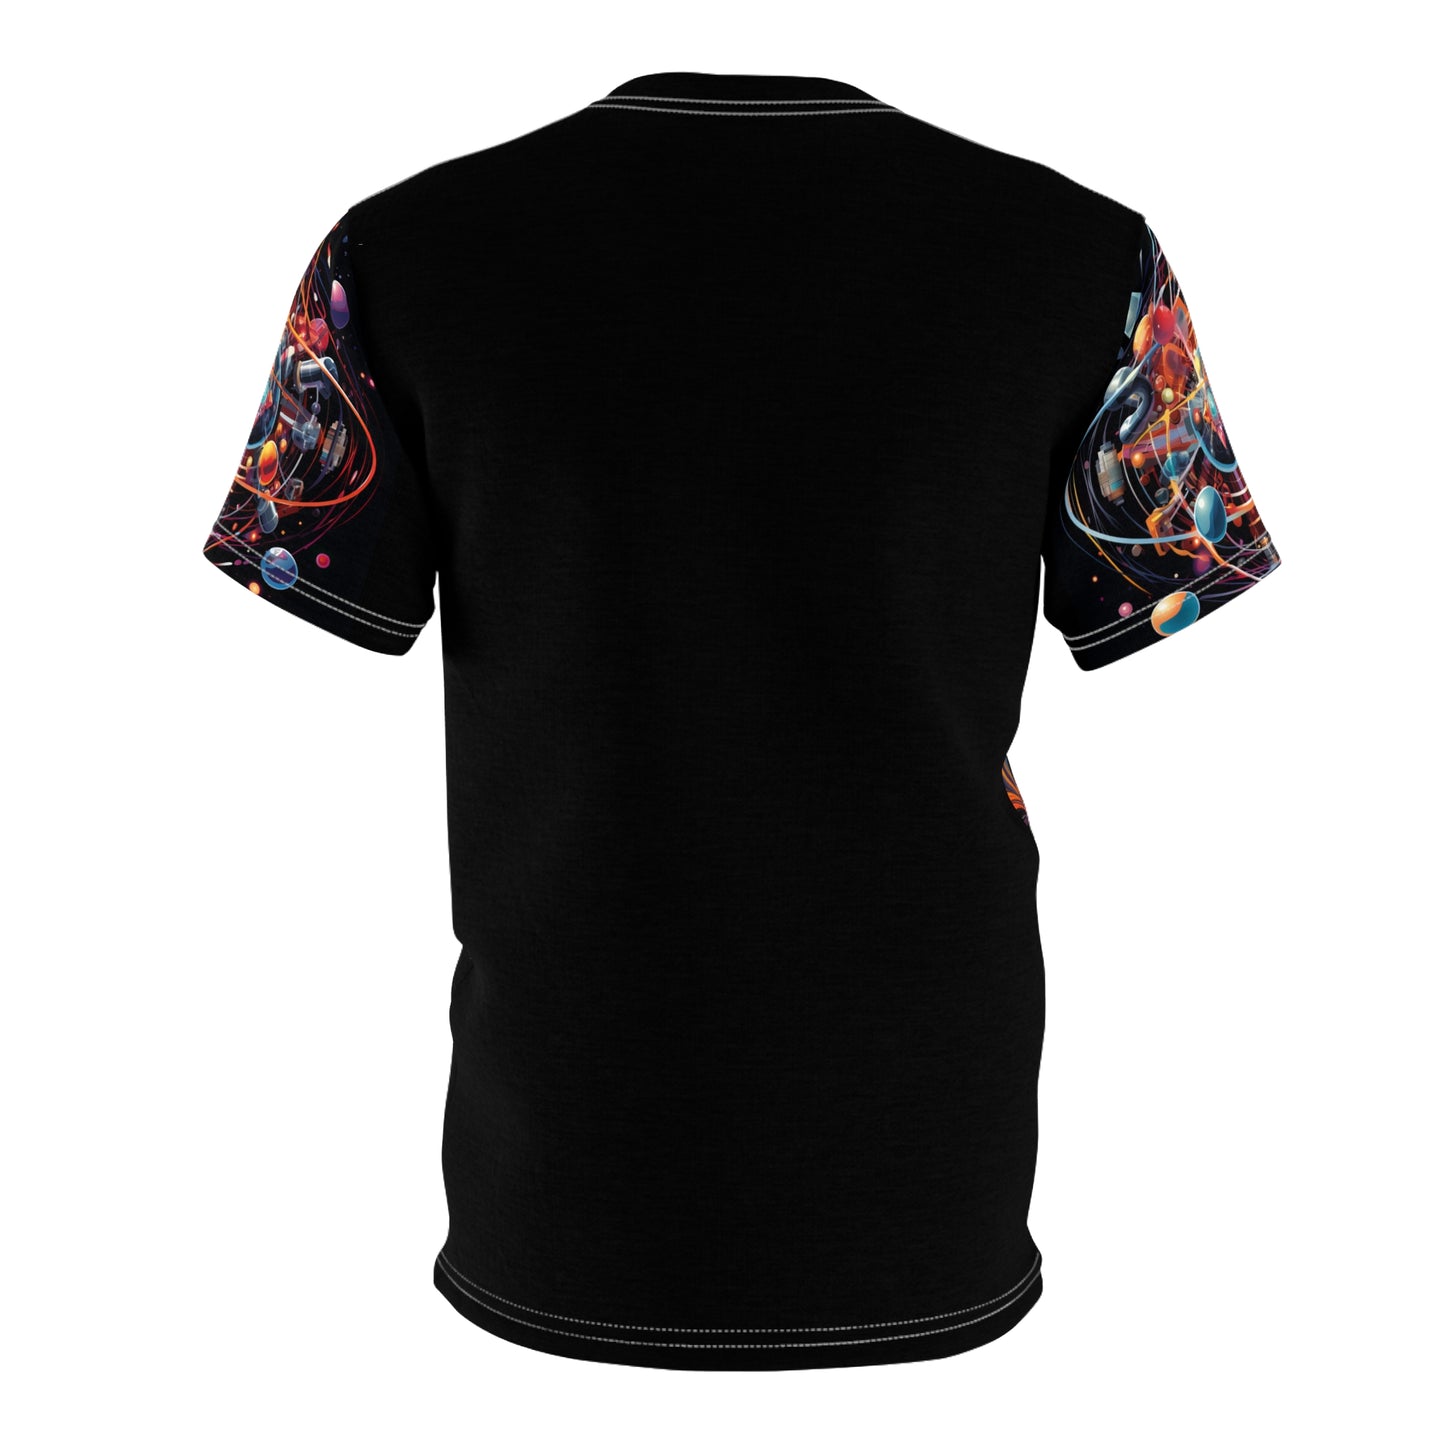 Cosmic Nuke Design T-Shirt